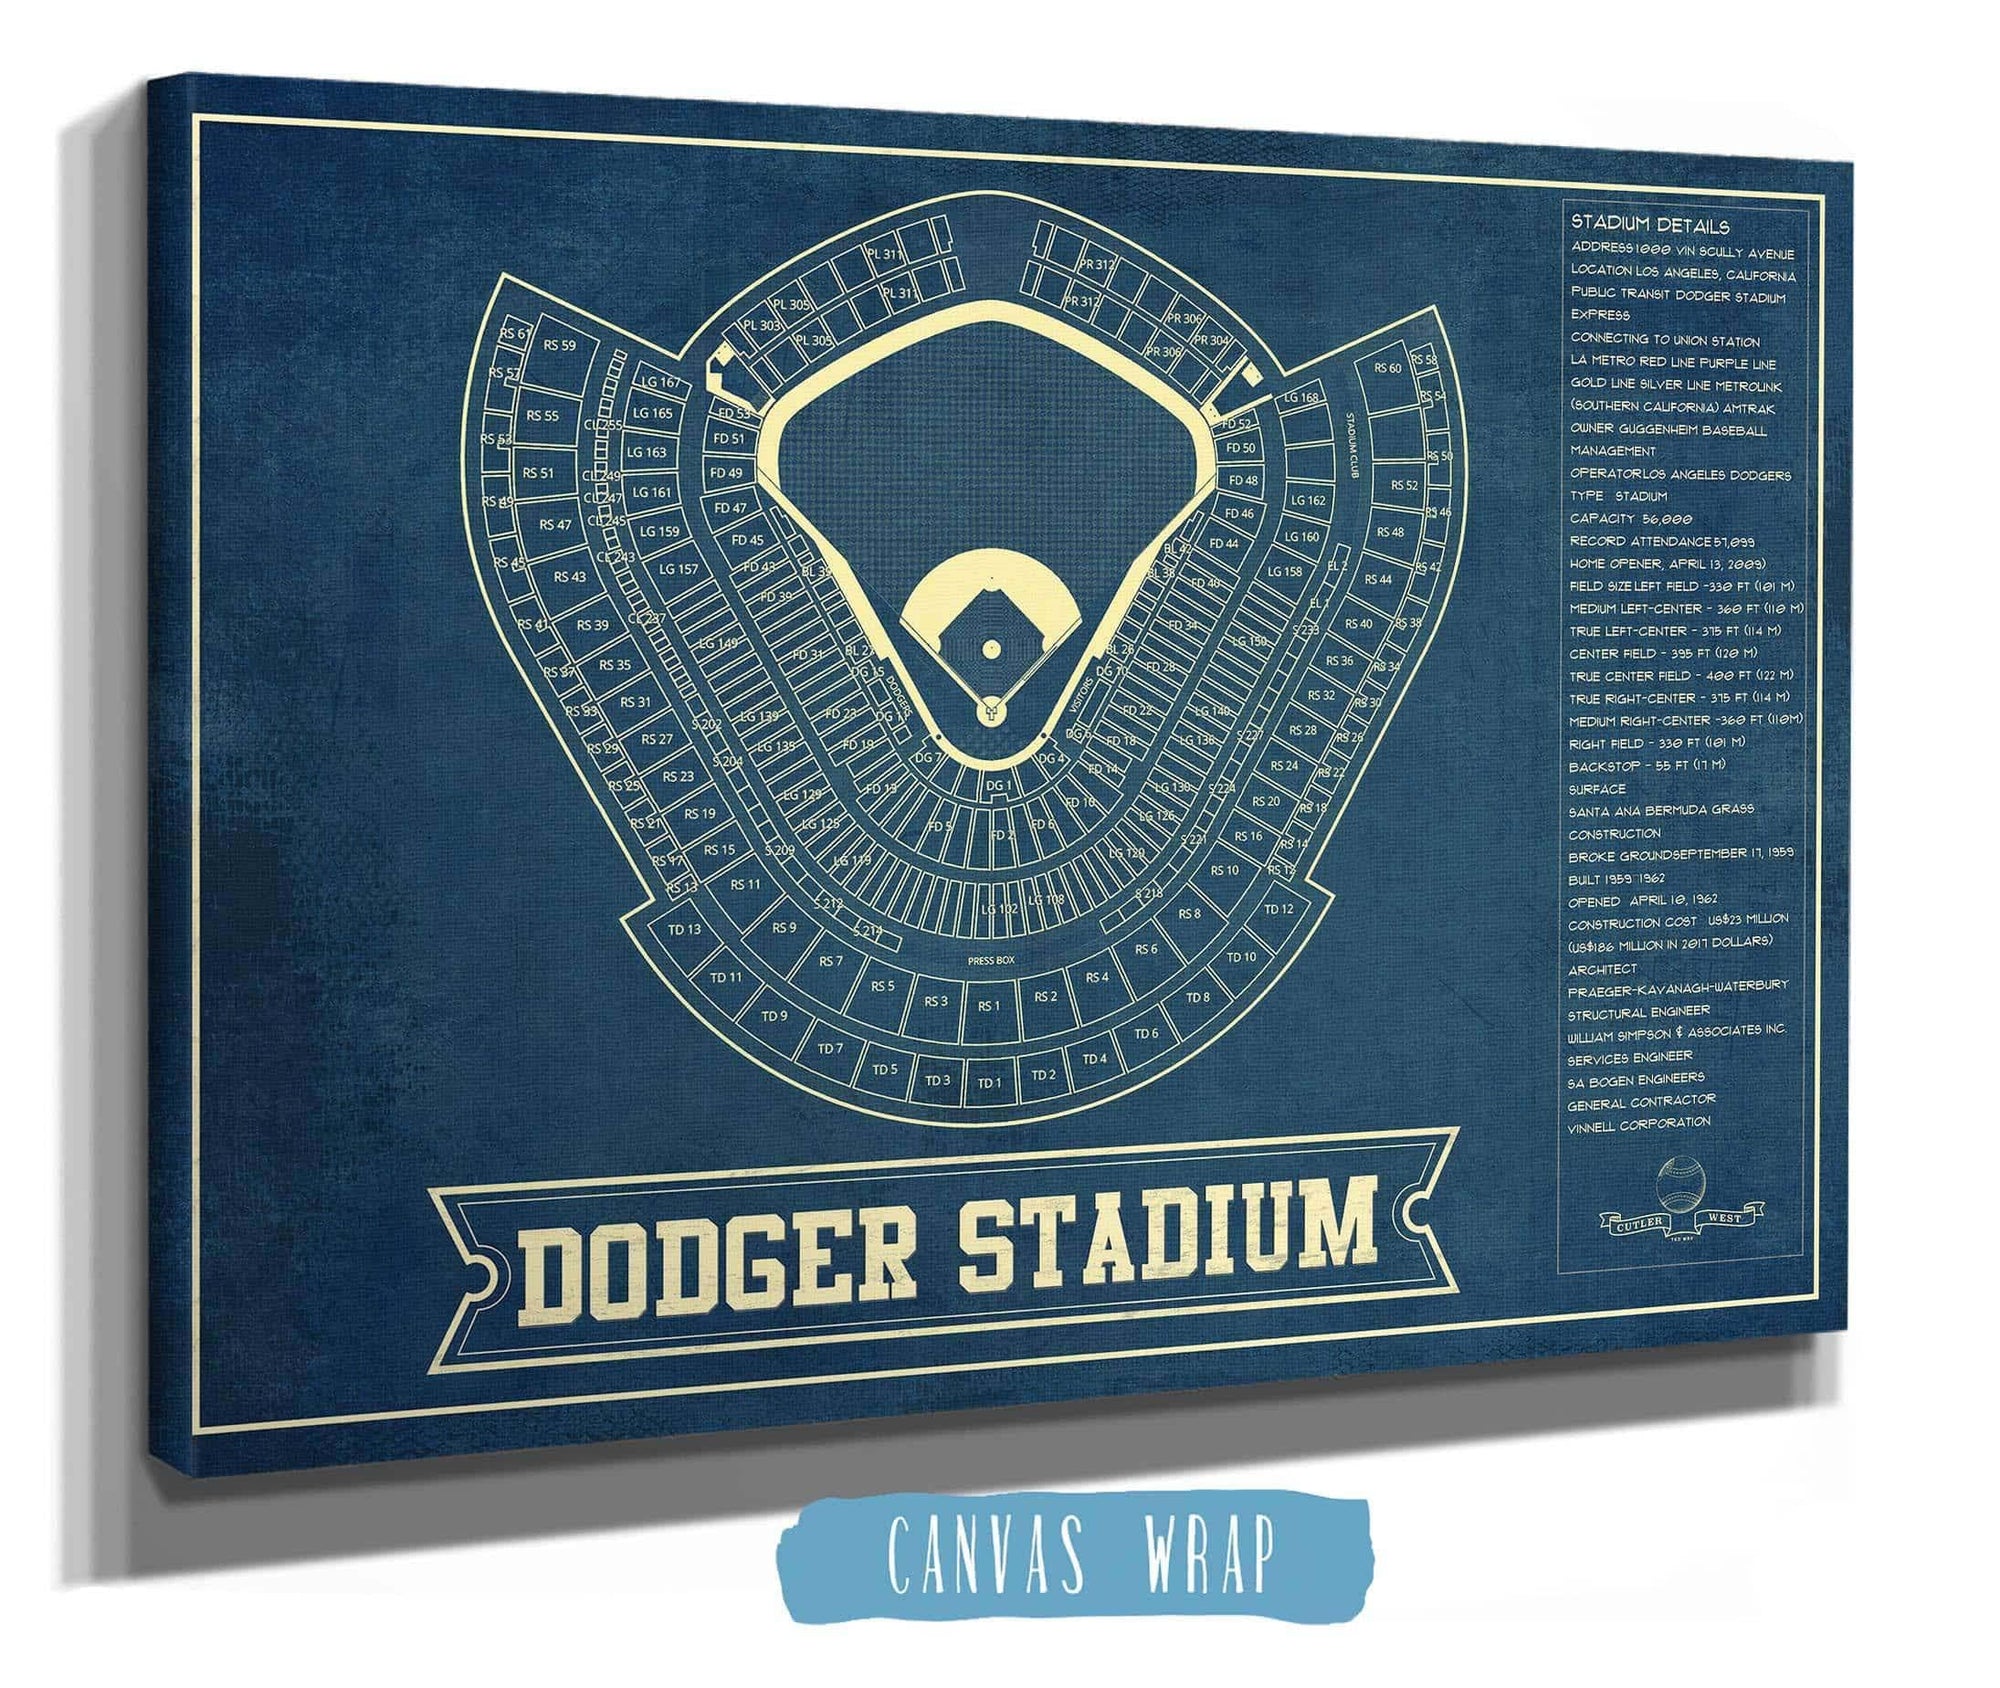 LA Dodgers Stadium Seating Chart - Vintage Baseball Fan Print